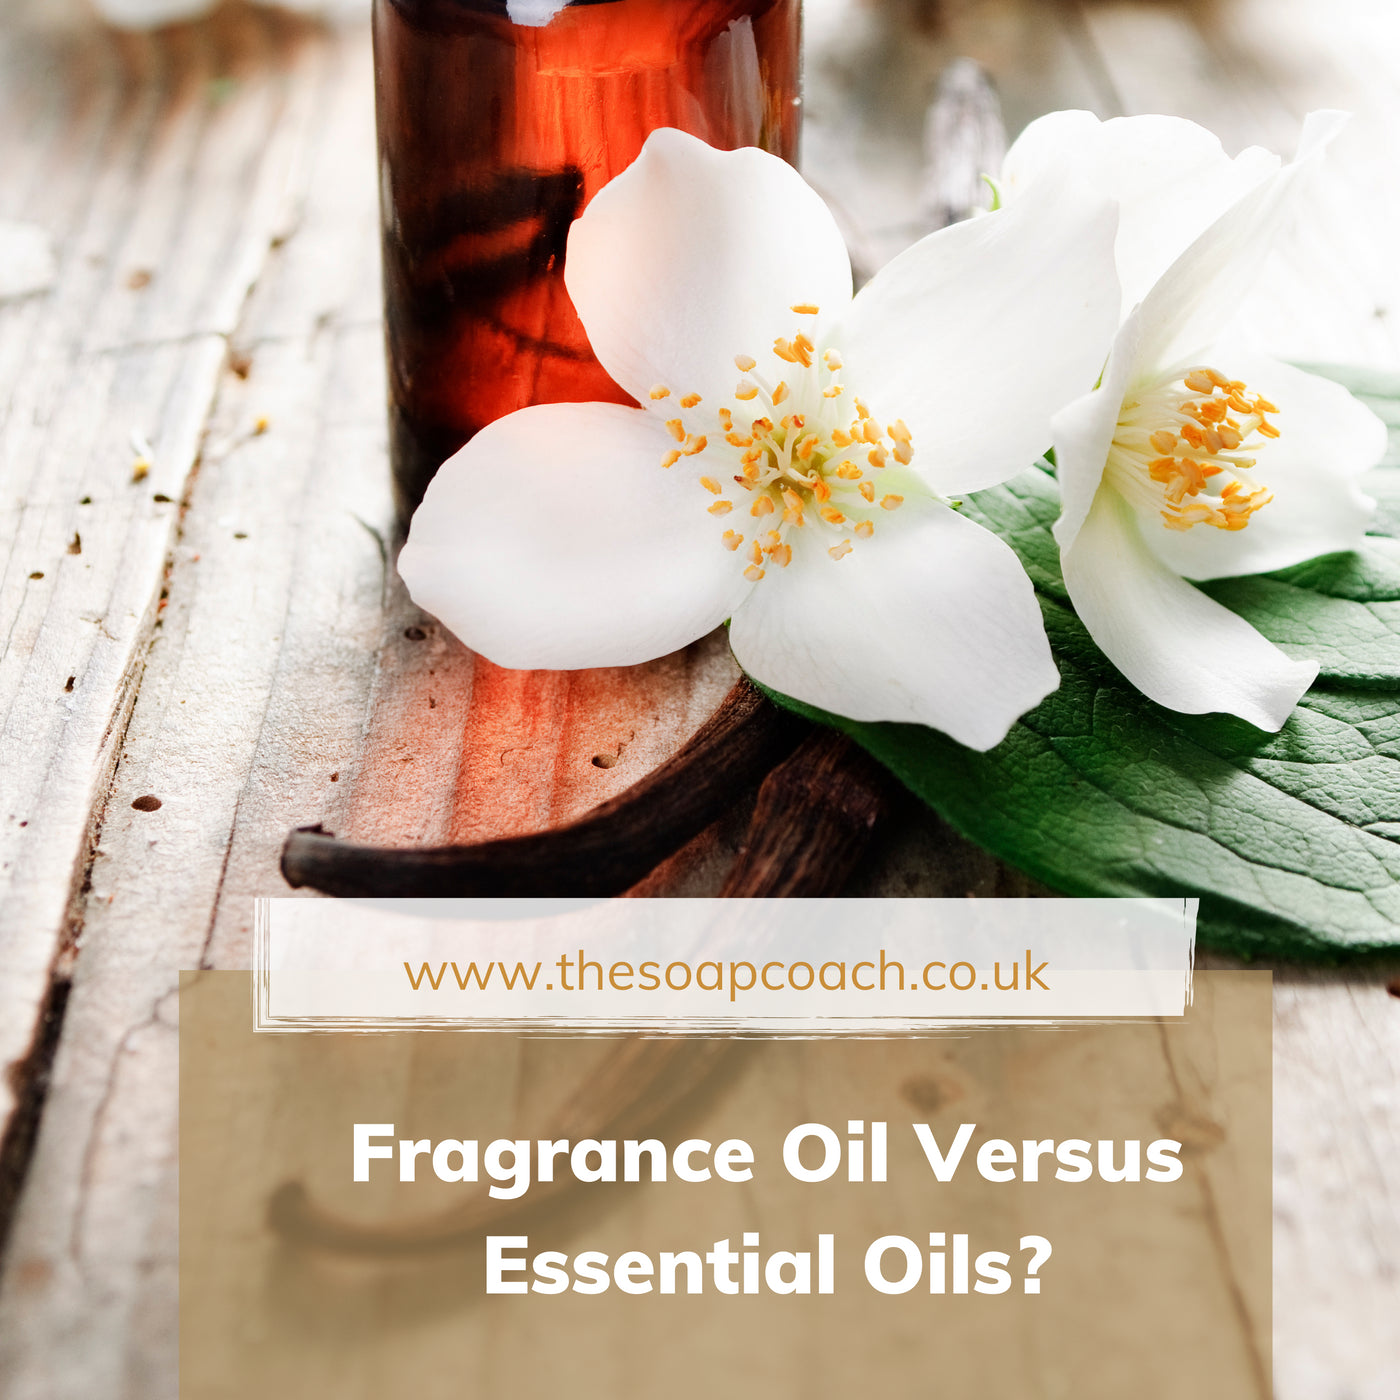 Fragrance Oils vs Essential Oils in Candles & Soap – VedaOils